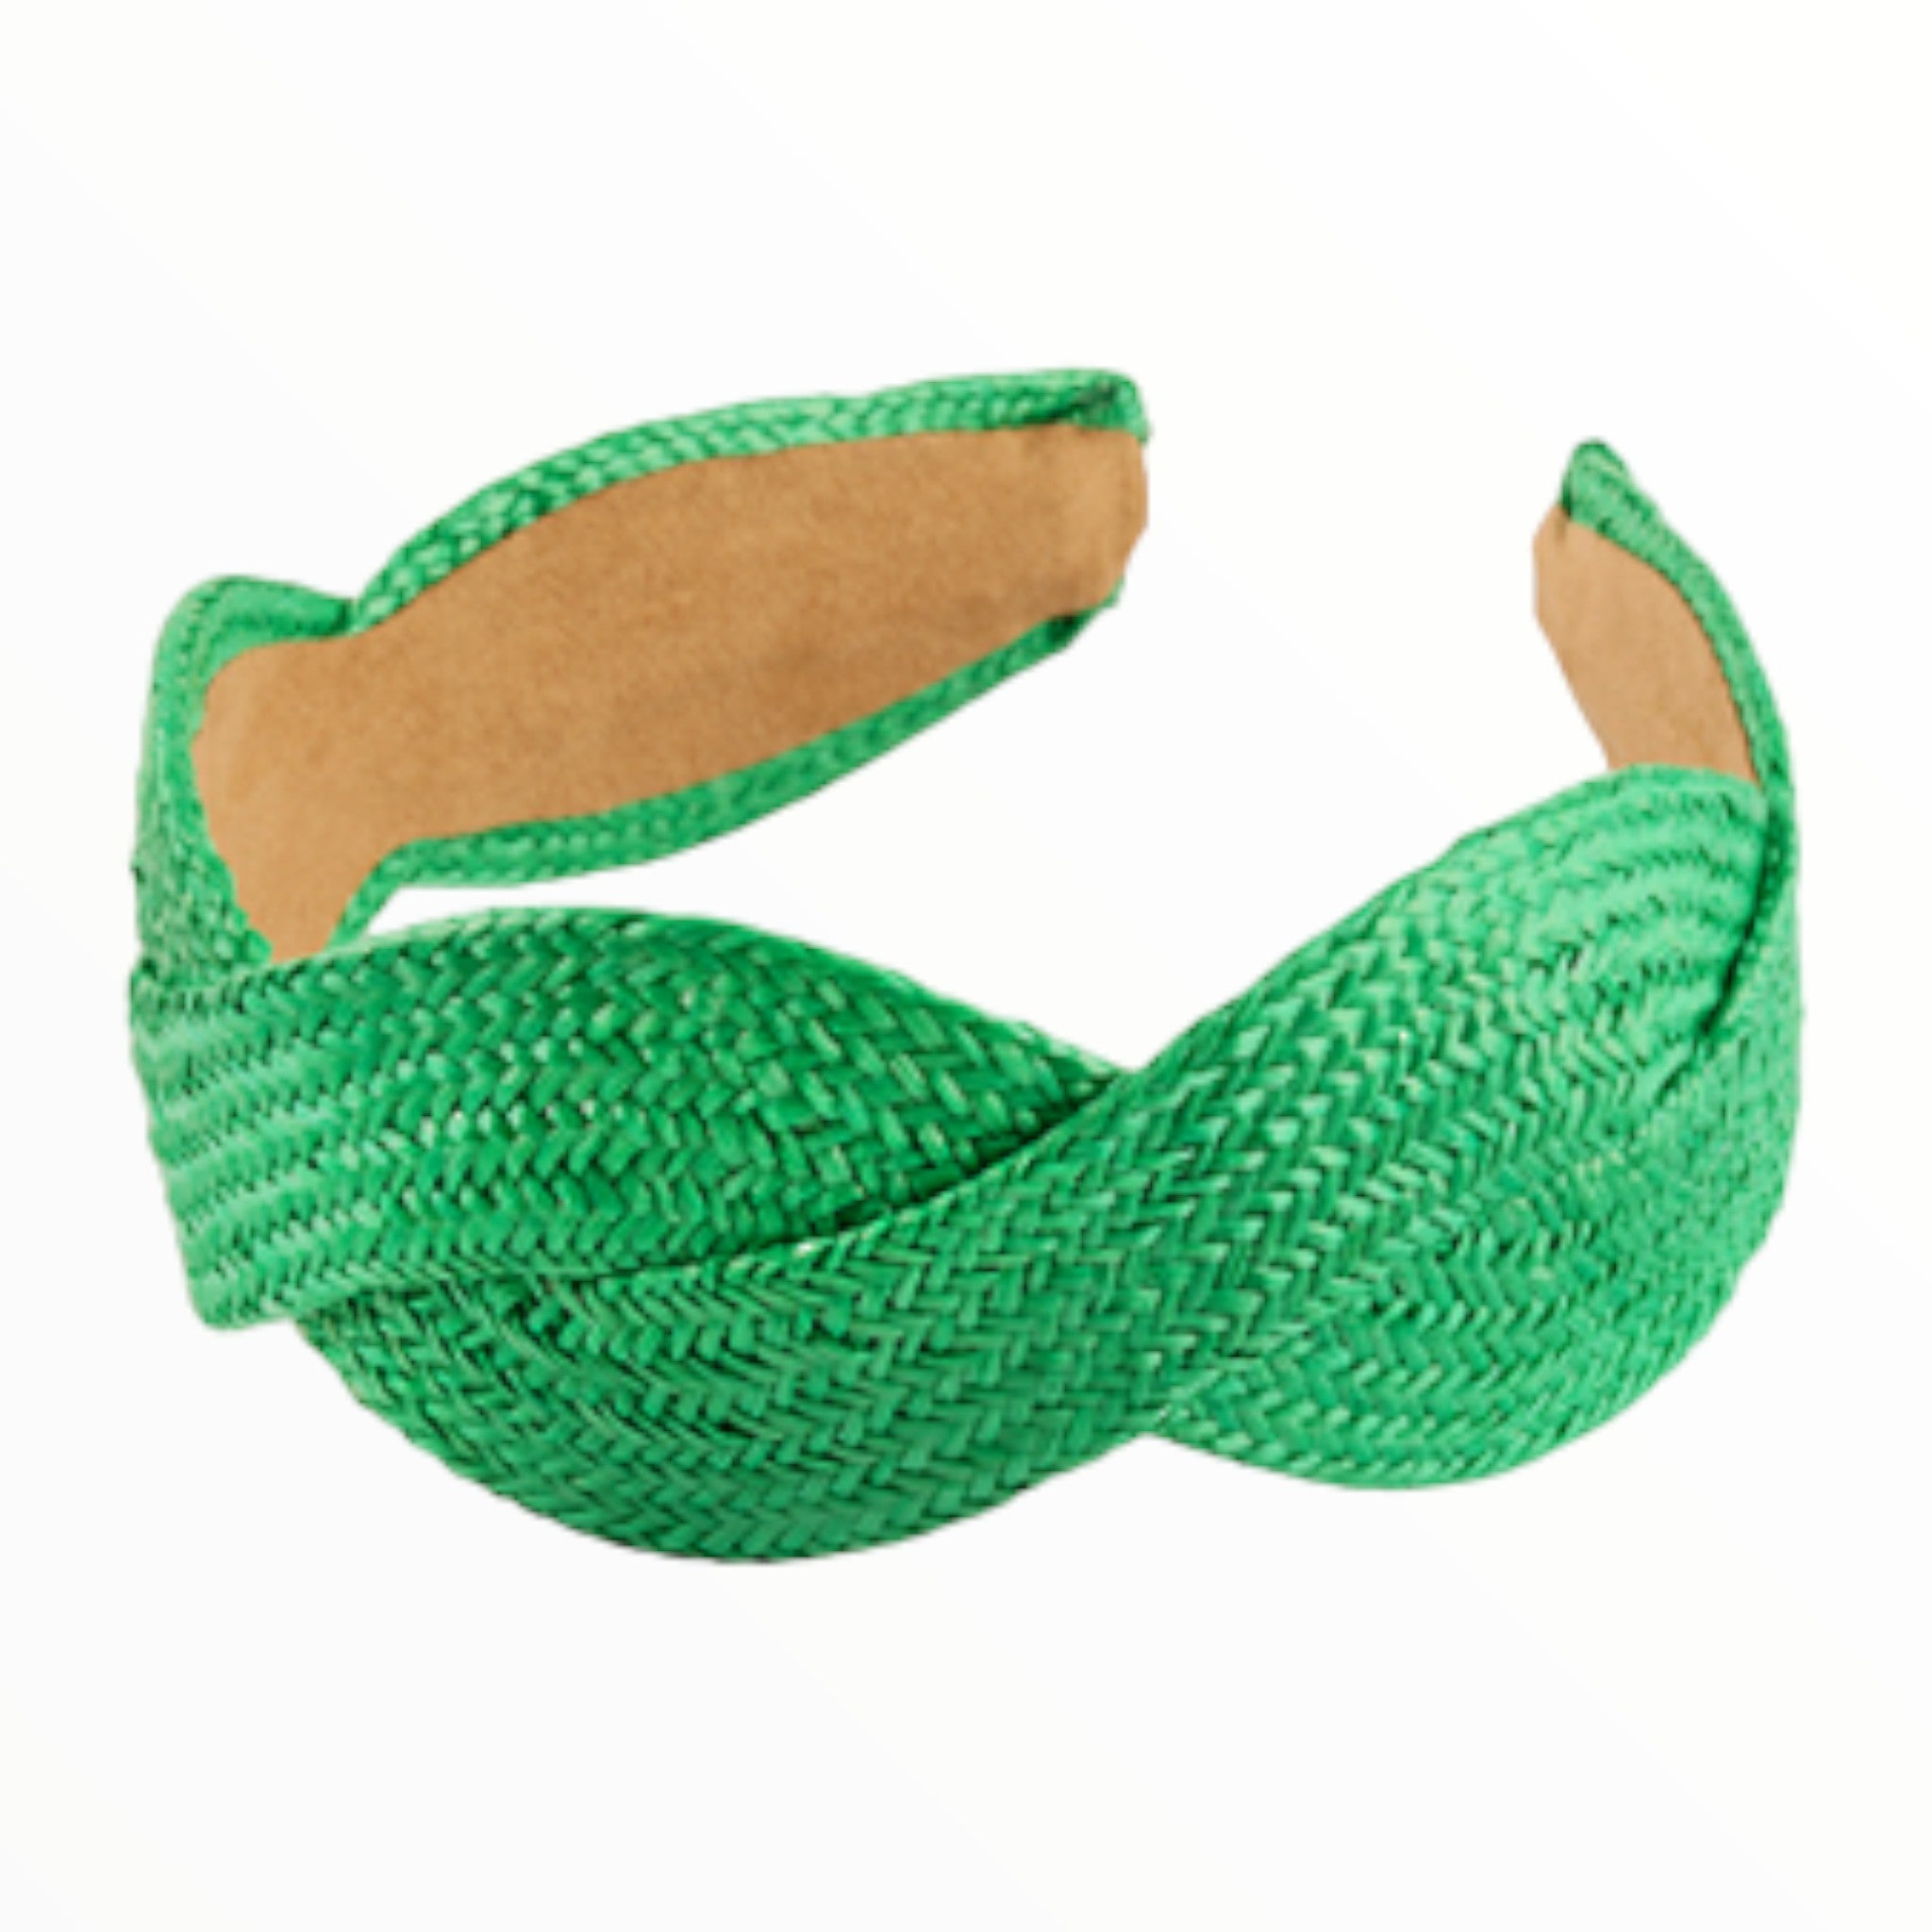 Green Straw Headband-Accessories-LouisGeorge Boutique-LouisGeorge Boutique, Women’s Fashion Boutique Located in Trussville, Alabama